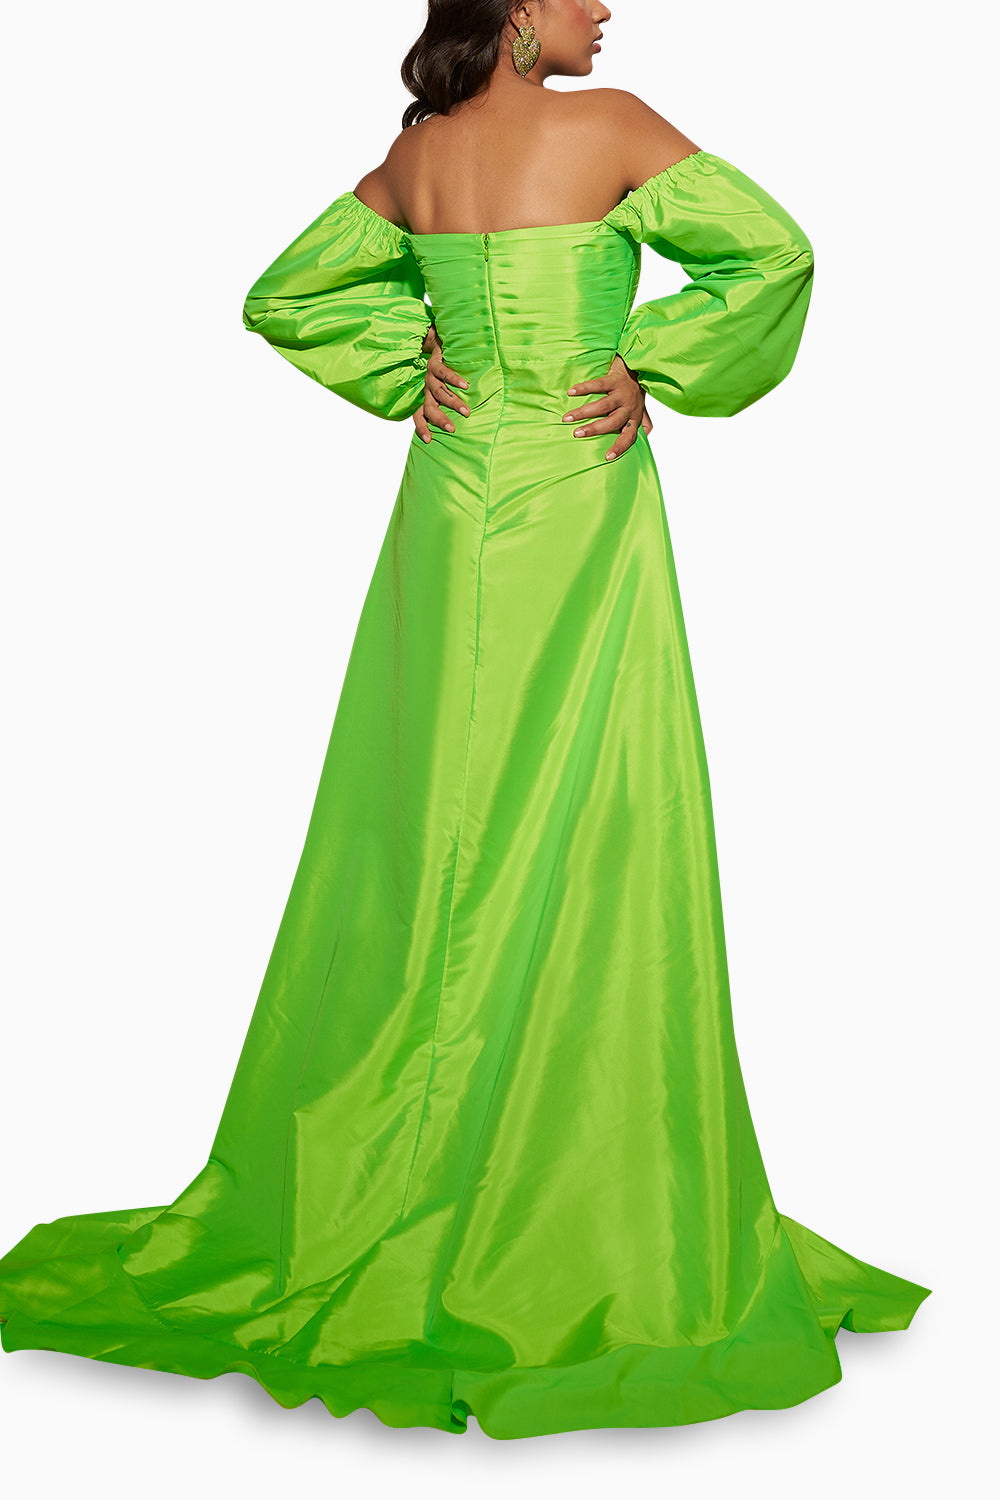 Pisco Lime Green Dress